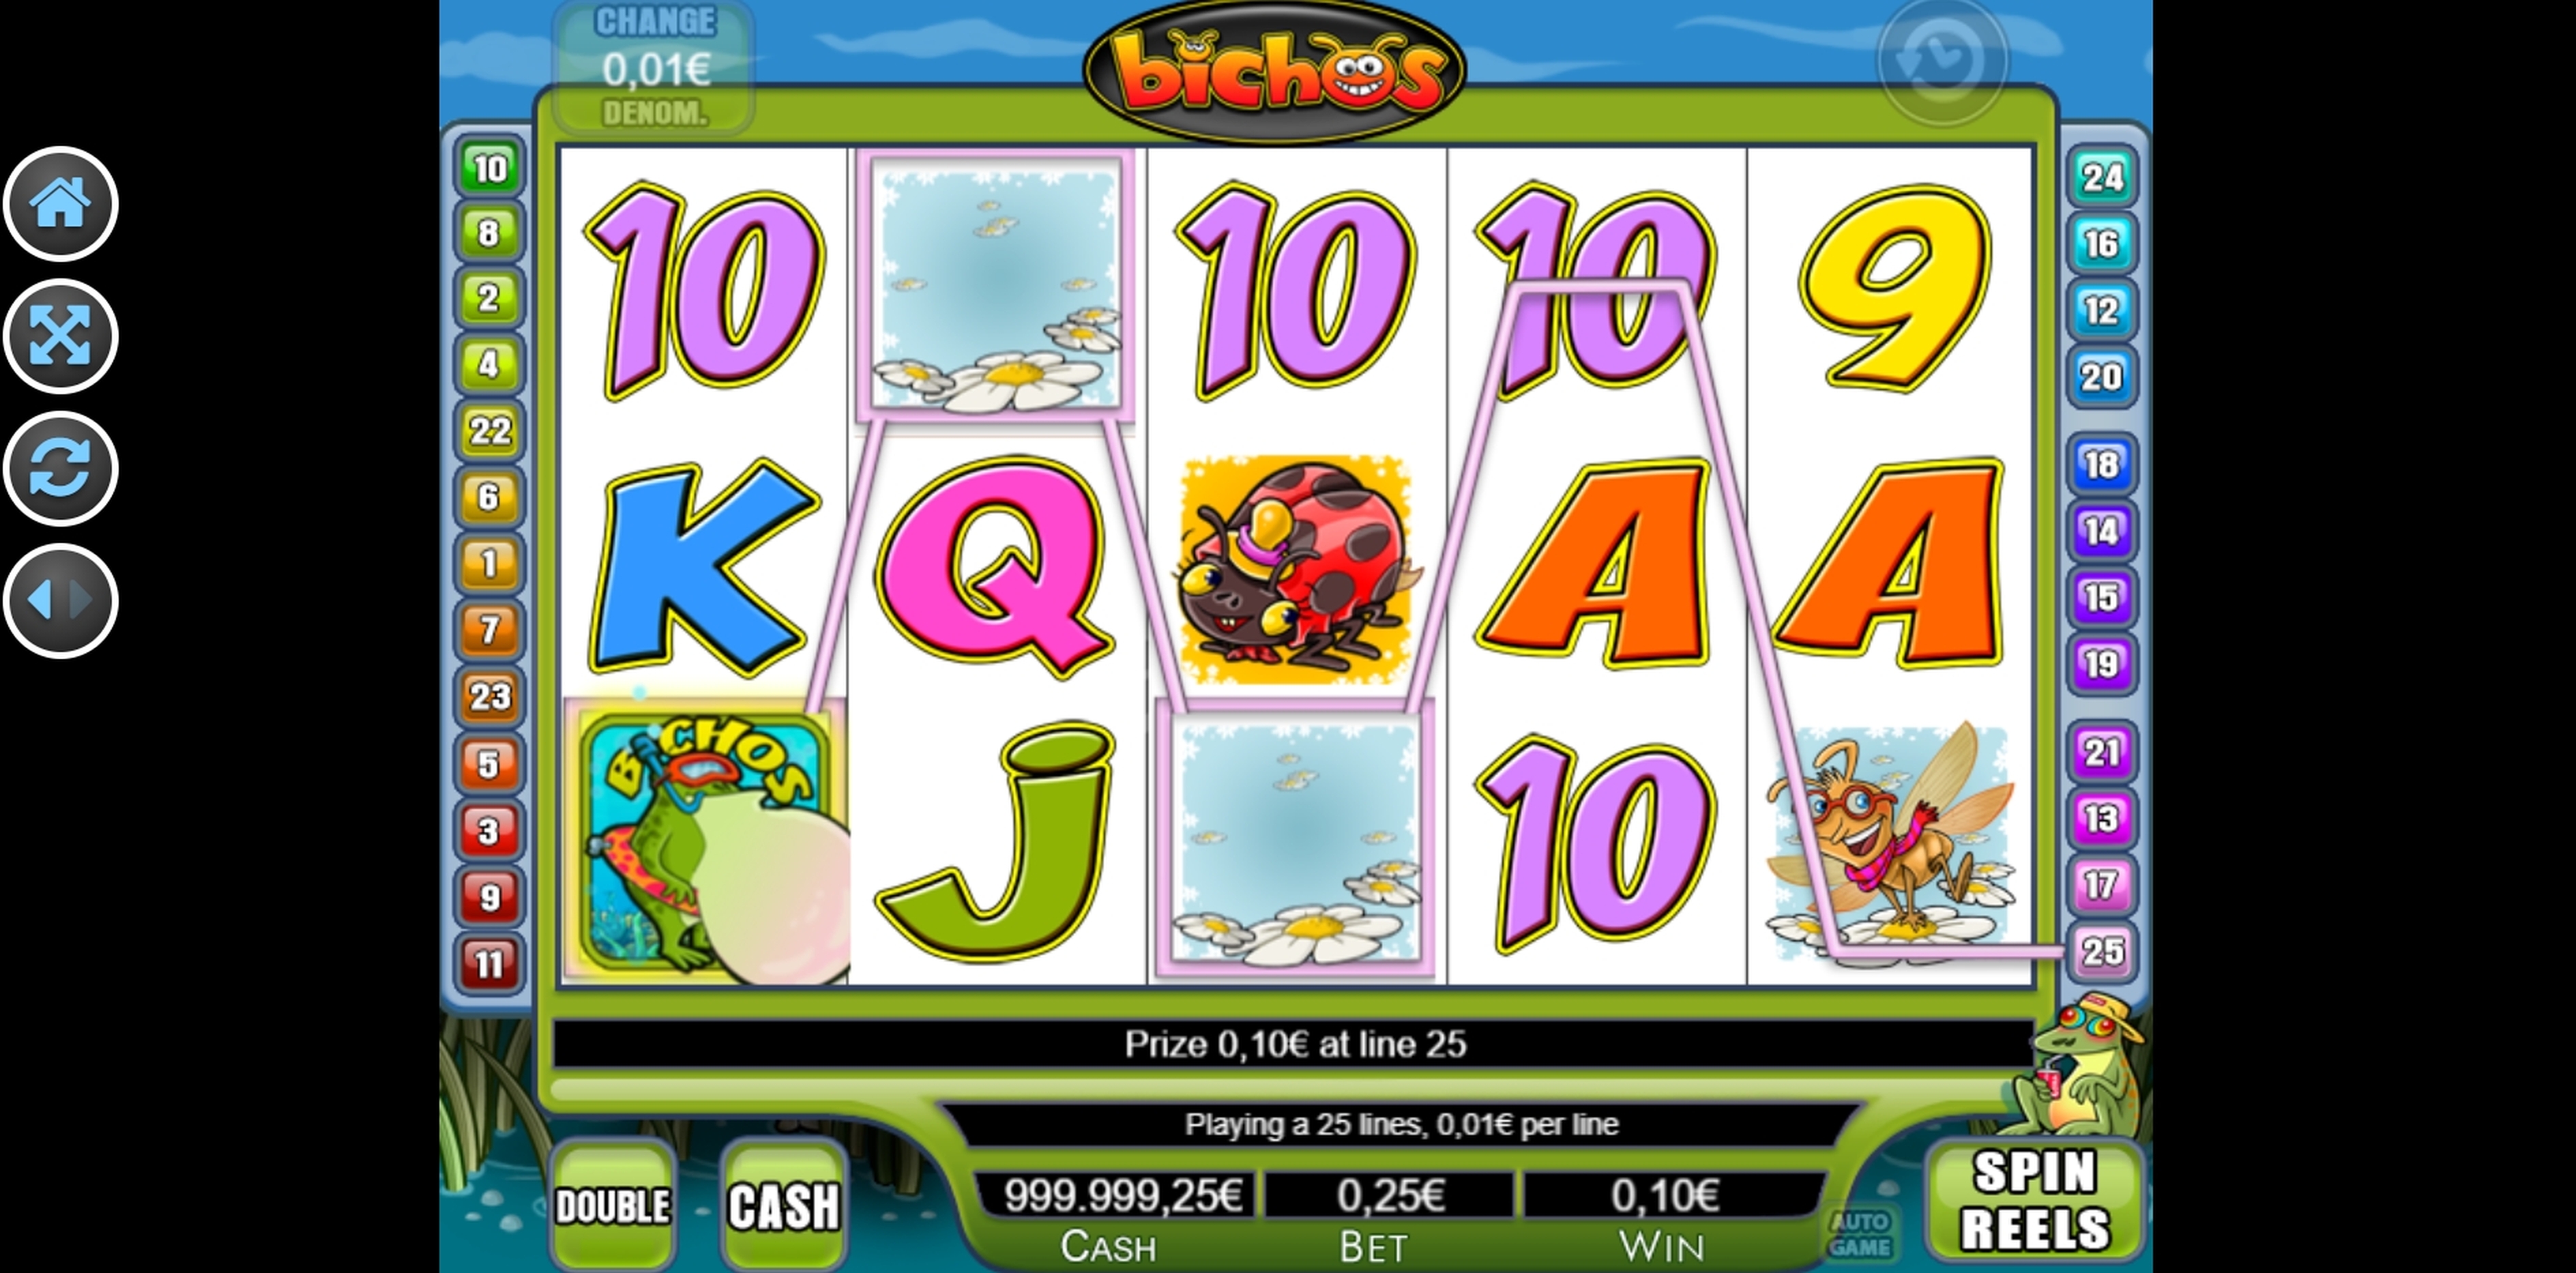 Win Money in Bichos Free Slot Game by R. Franco